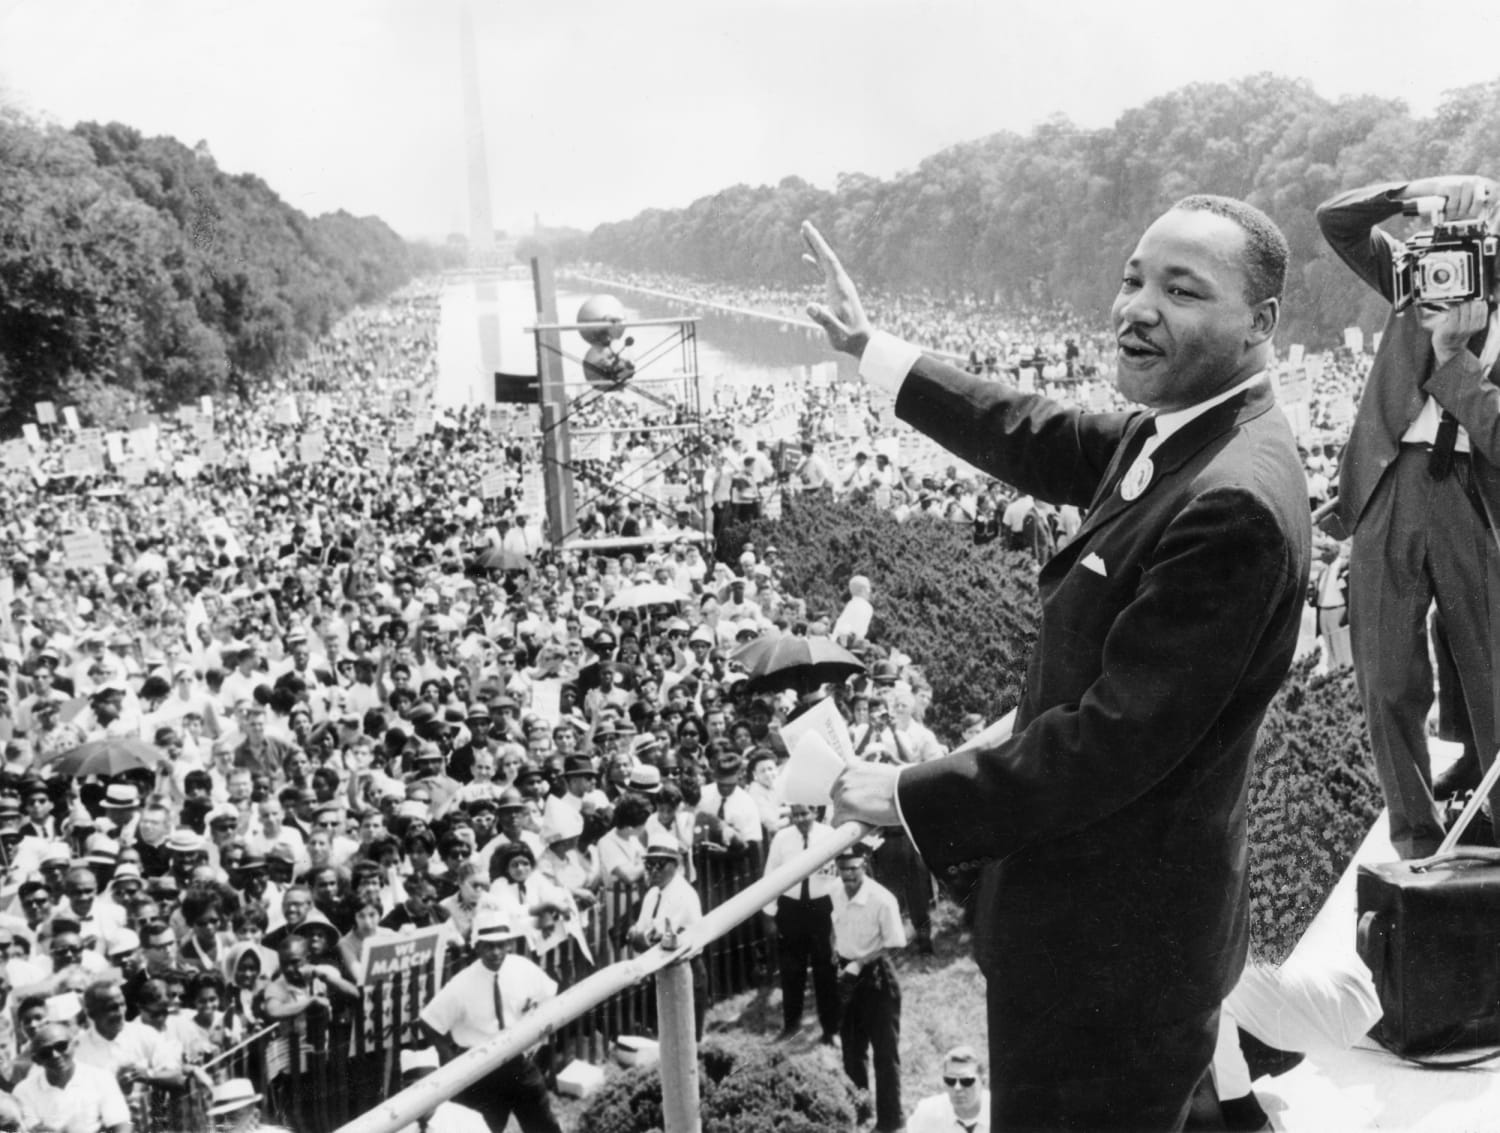 Cartoon depiction of MLK's 'I Have a Dream' speech in Missouri newspaper  criticized as racist